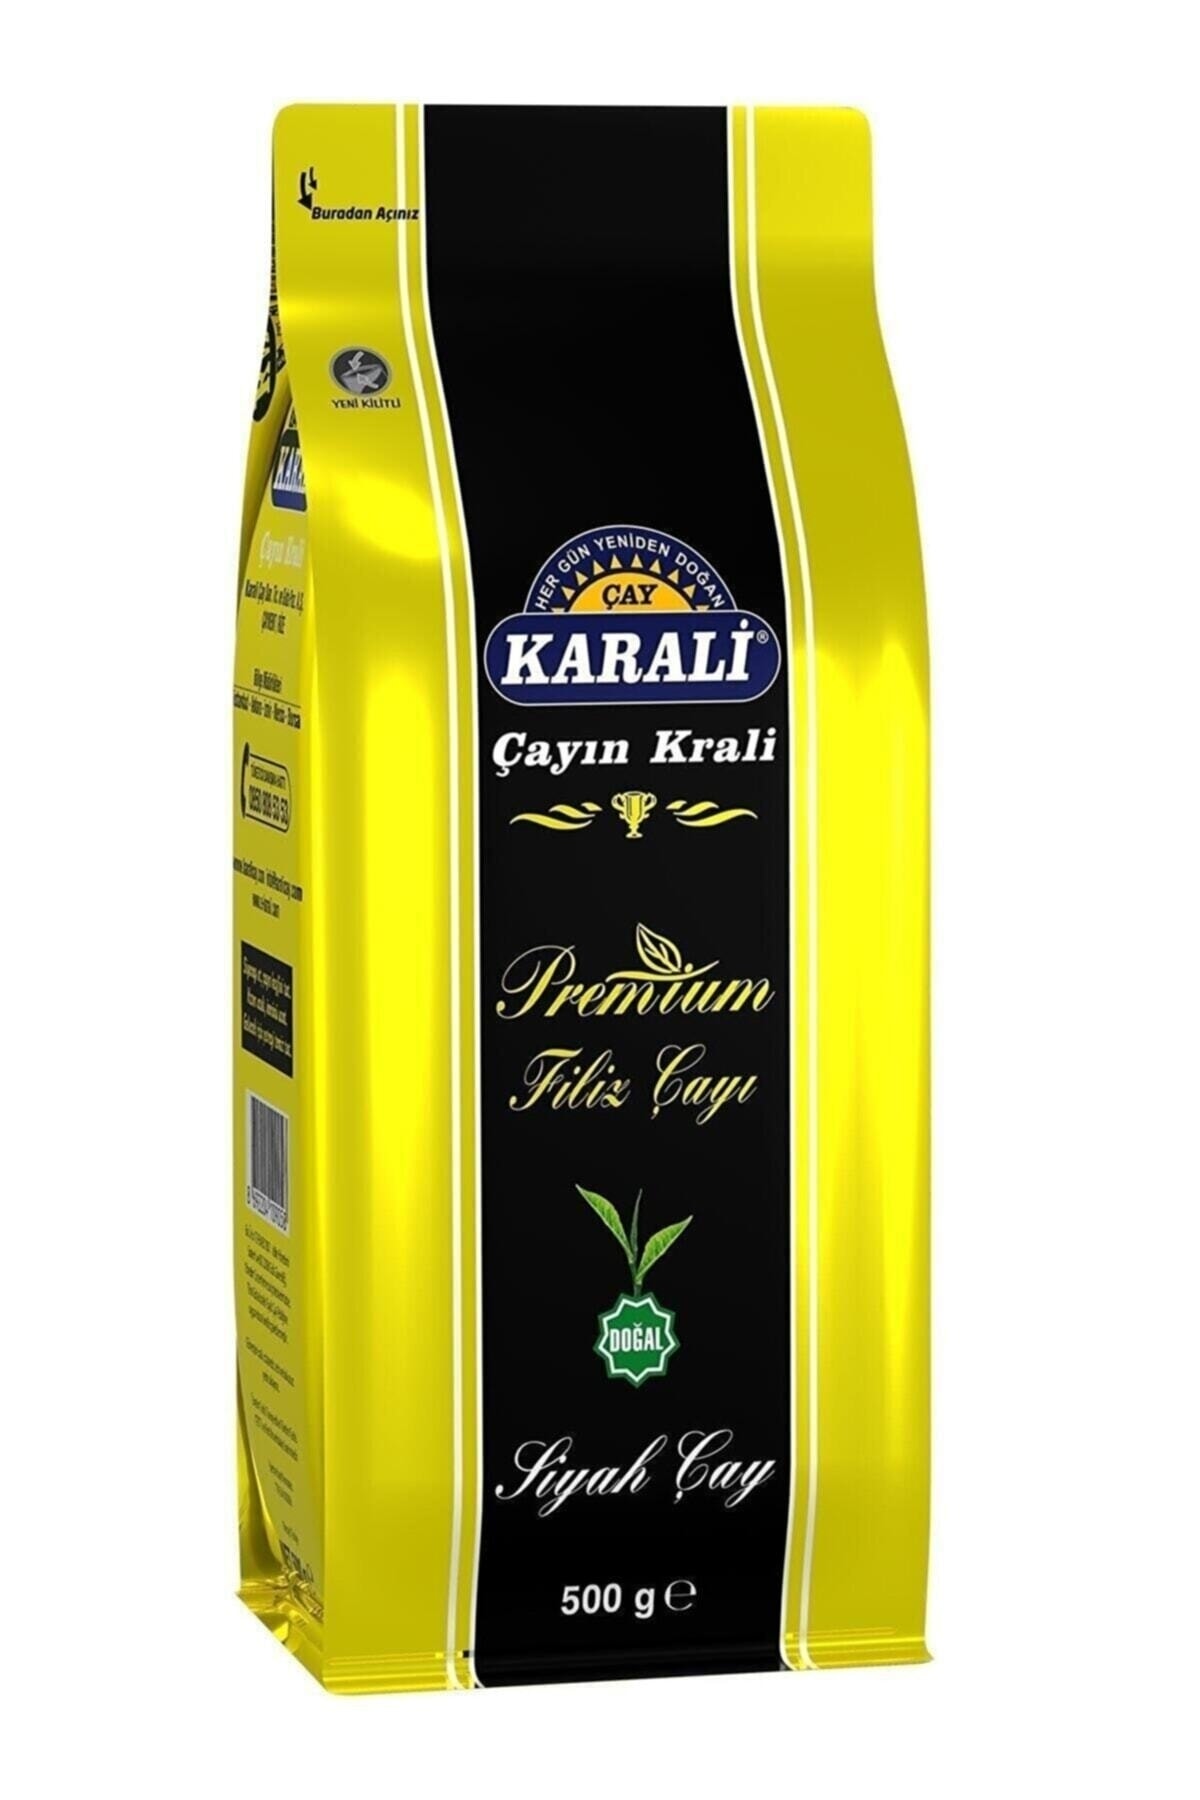 Karali Çay Karali Premium Filiz Dökme Çay 500 X 10 Adet 1 Koli